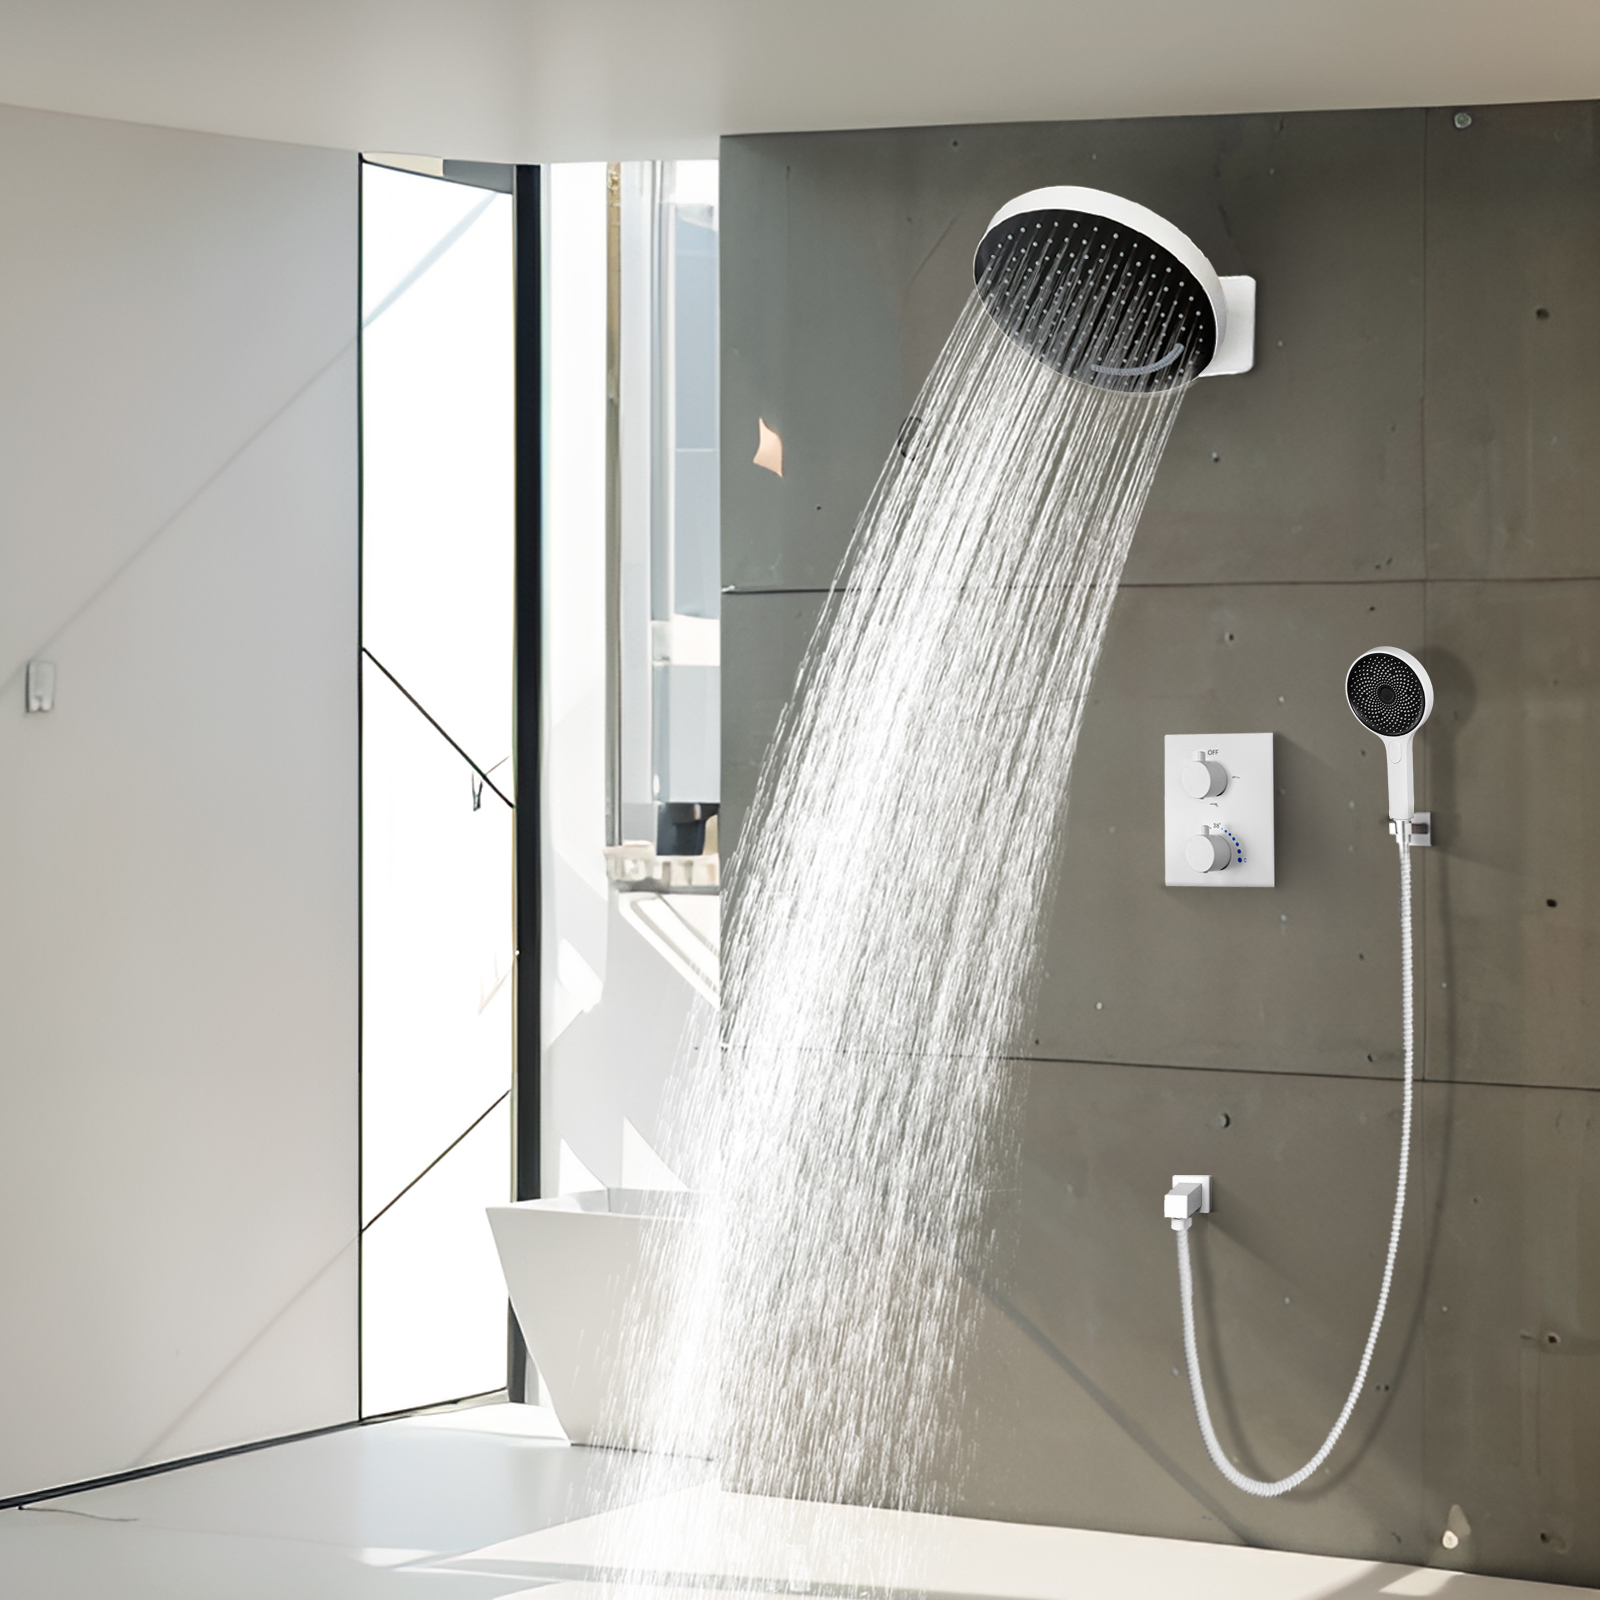 Sistemas de cabezal de ducha de baño, fabricante de sistema de grifo híbrido de temperatura tipo perilla blanca mattic 